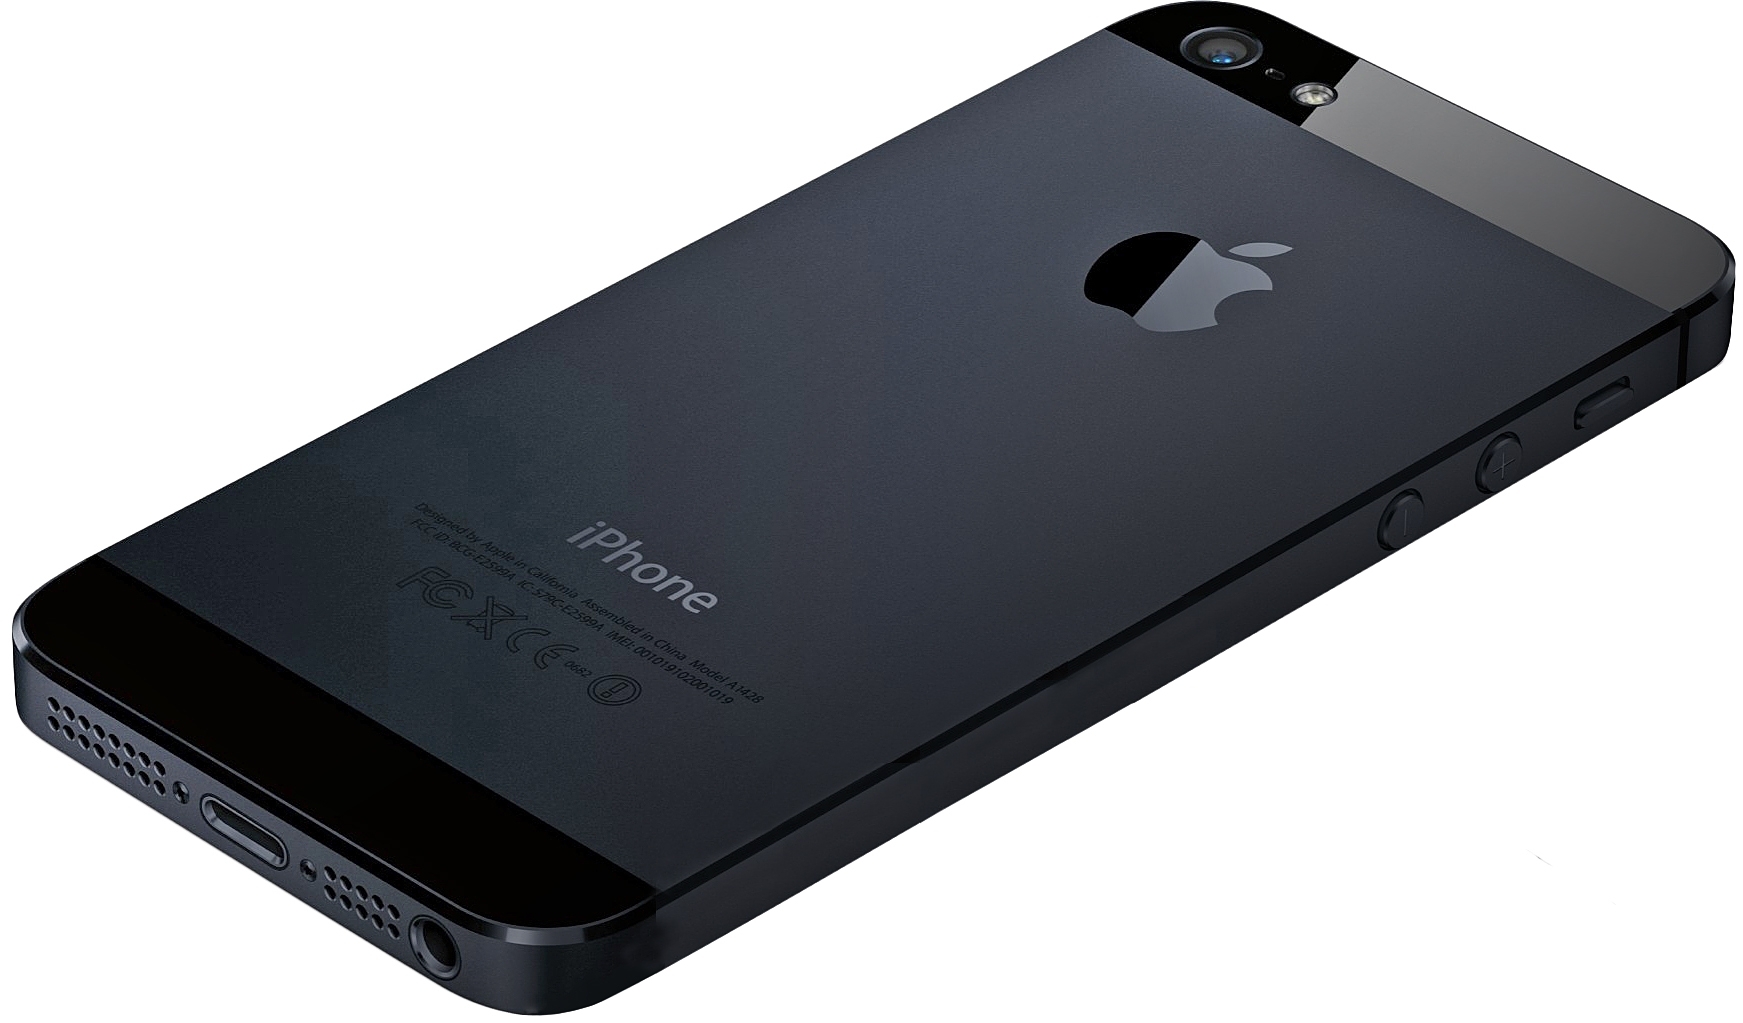 Iphone 5 1. Iphone 5 16gb. Iphone 5 16gb Black. Iphone 5 черный. Apple 5s черный.